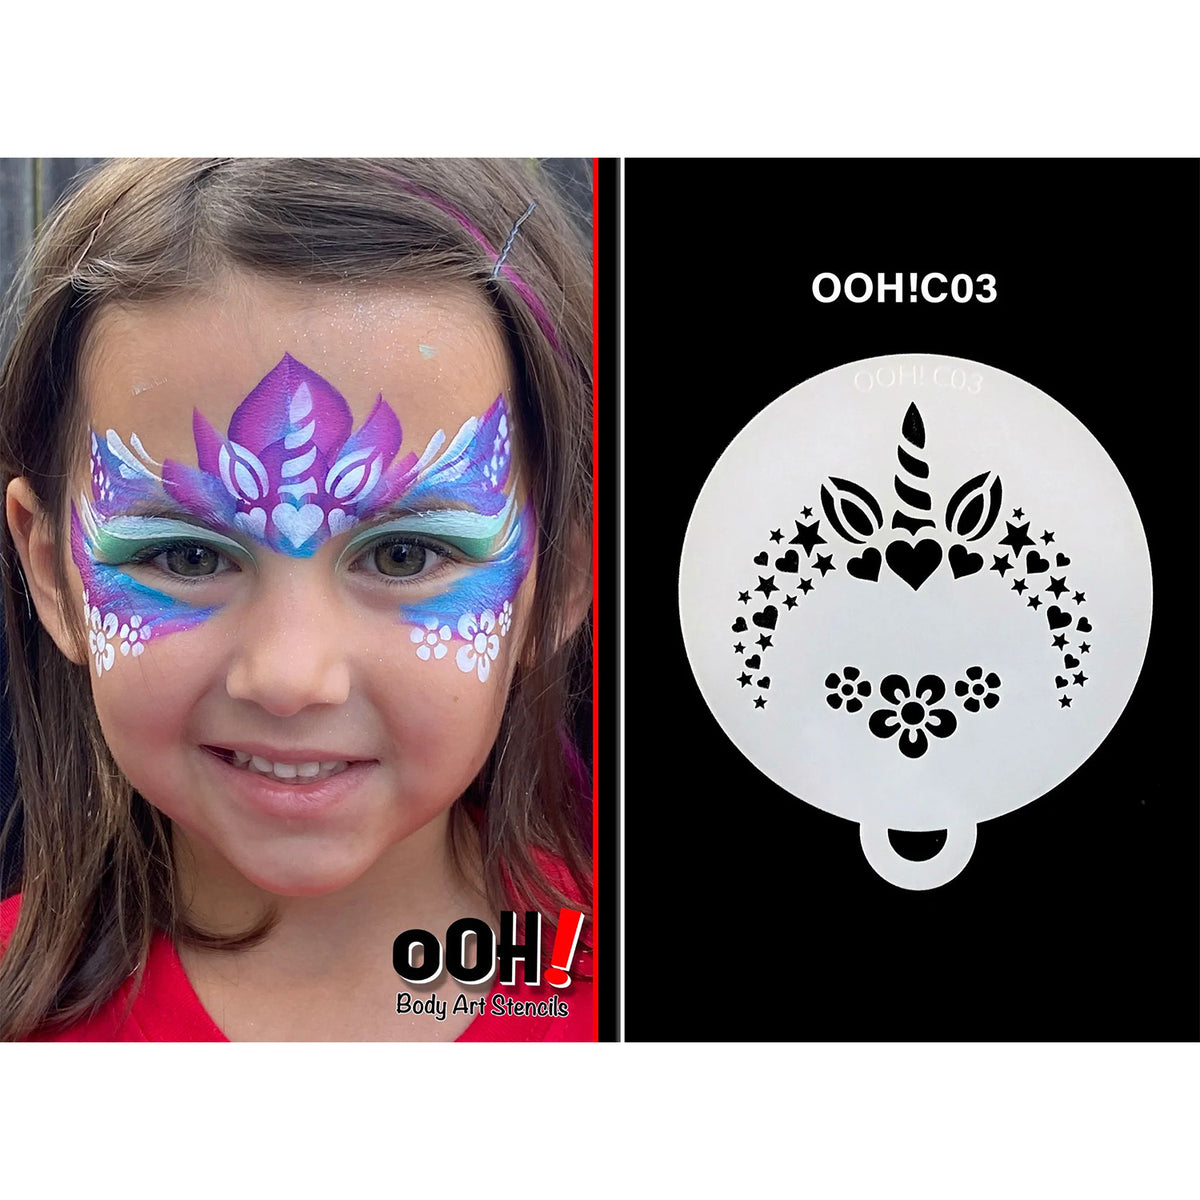 Face Paint Kit for Kids - Vibrant Face Painting Colors, Stencils